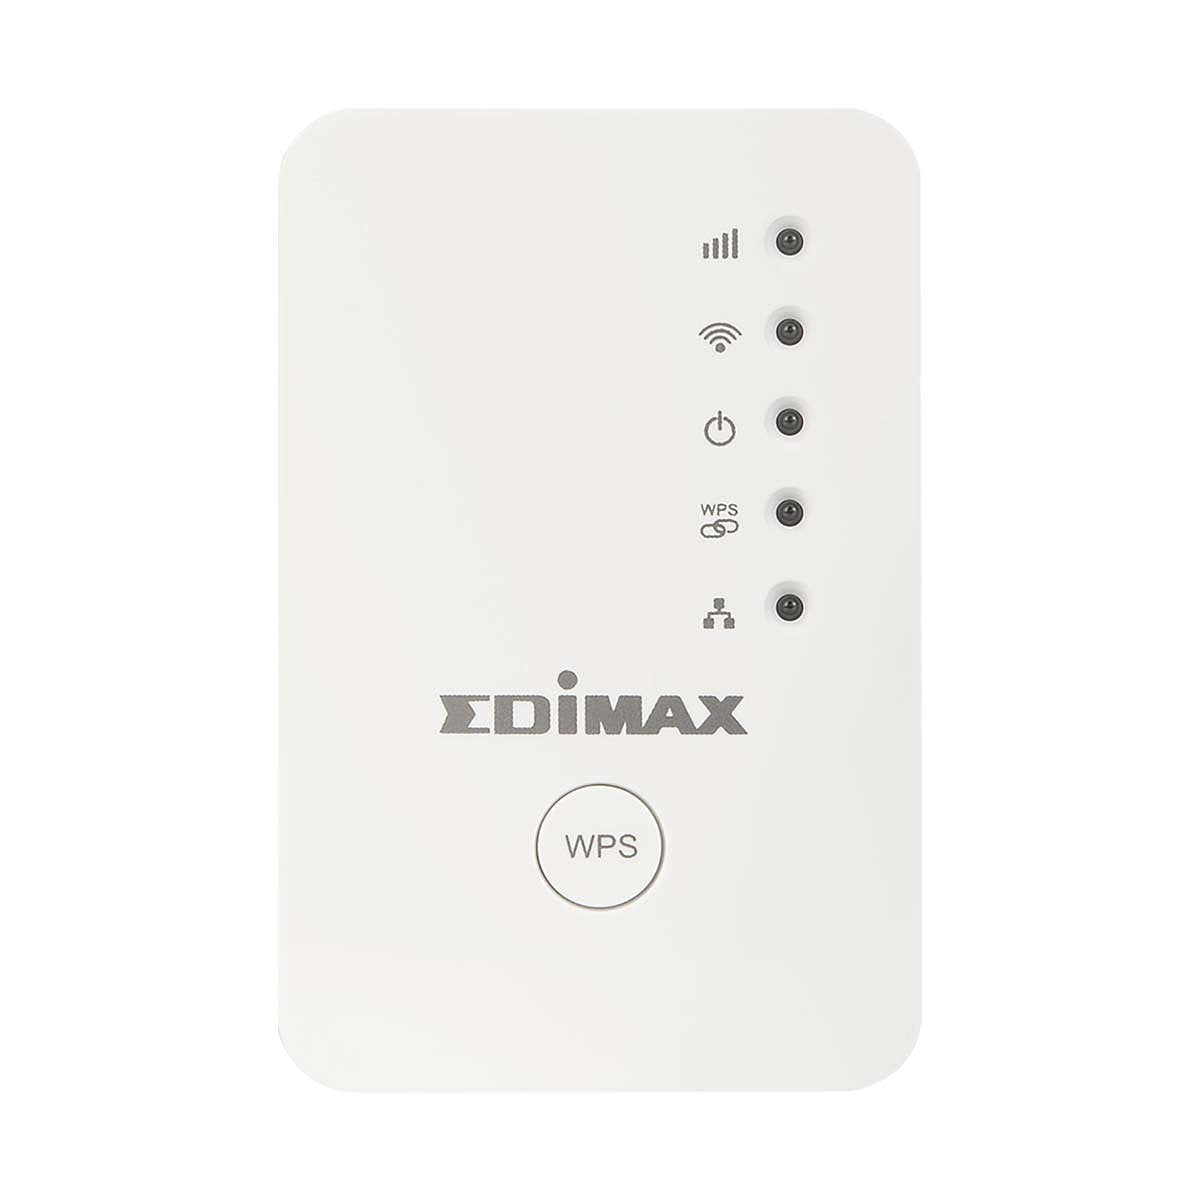 Edimax Draadloze Repeater/Extender N300 2.4 GHz 10/100 Mbit Wit